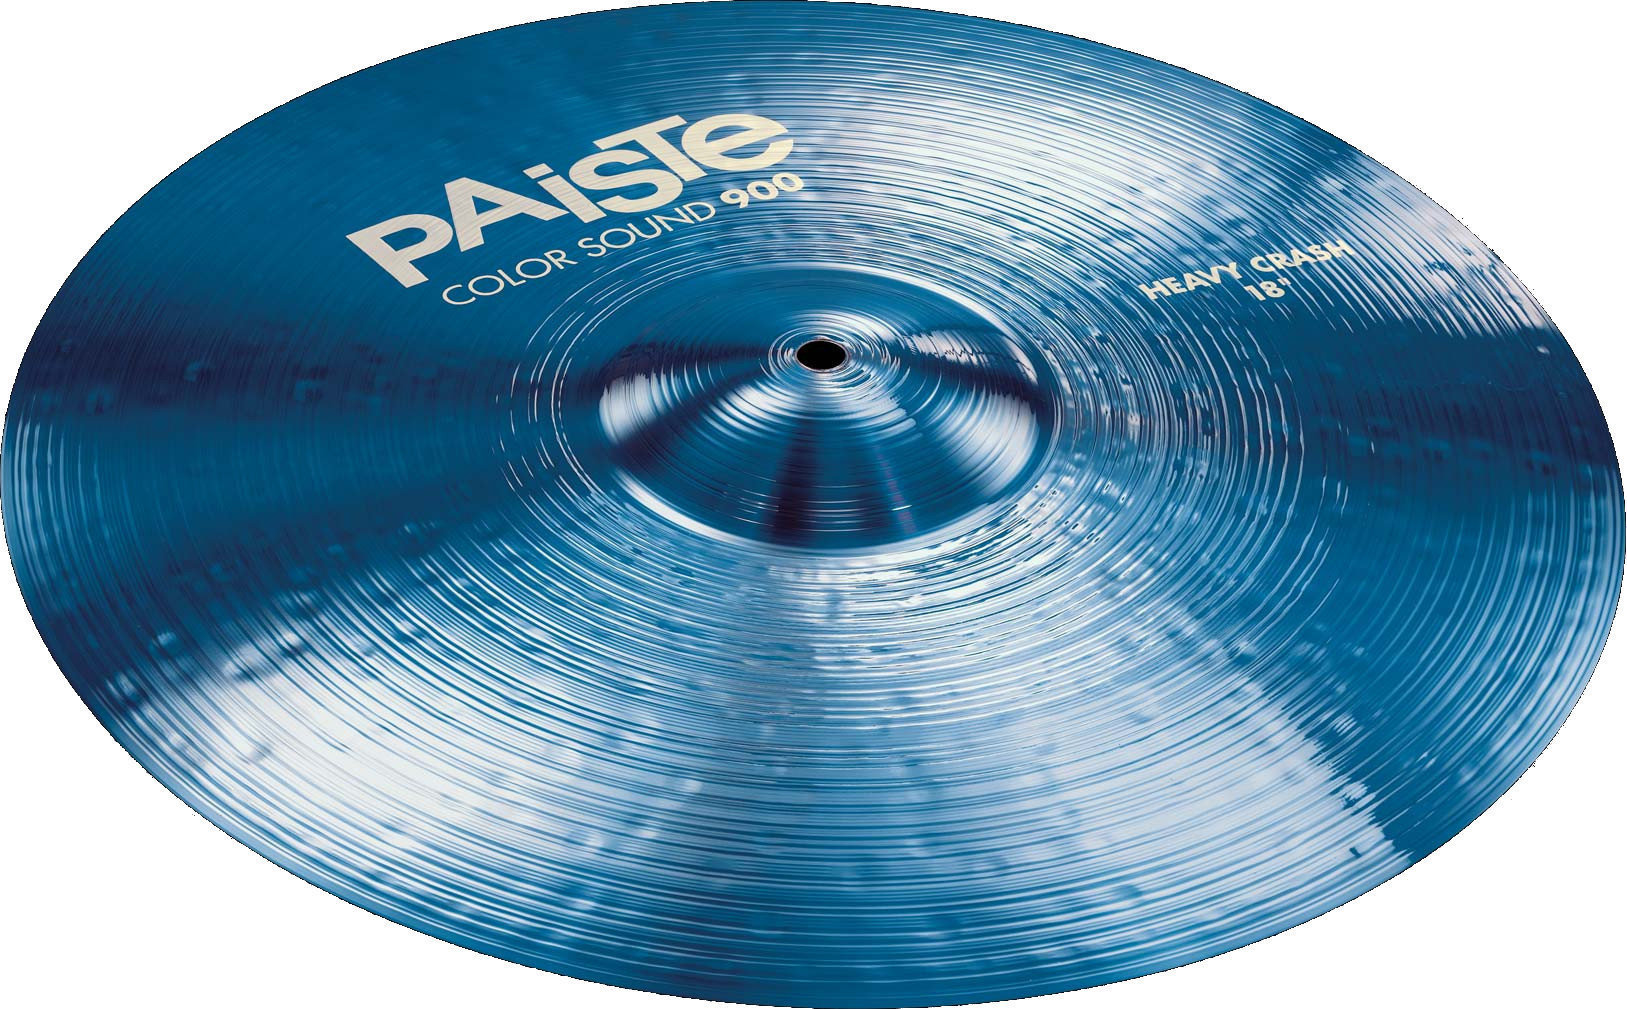 Crash Cymbal Paiste Color Sound 900  Heavy Crash Cymbal 20" Blue